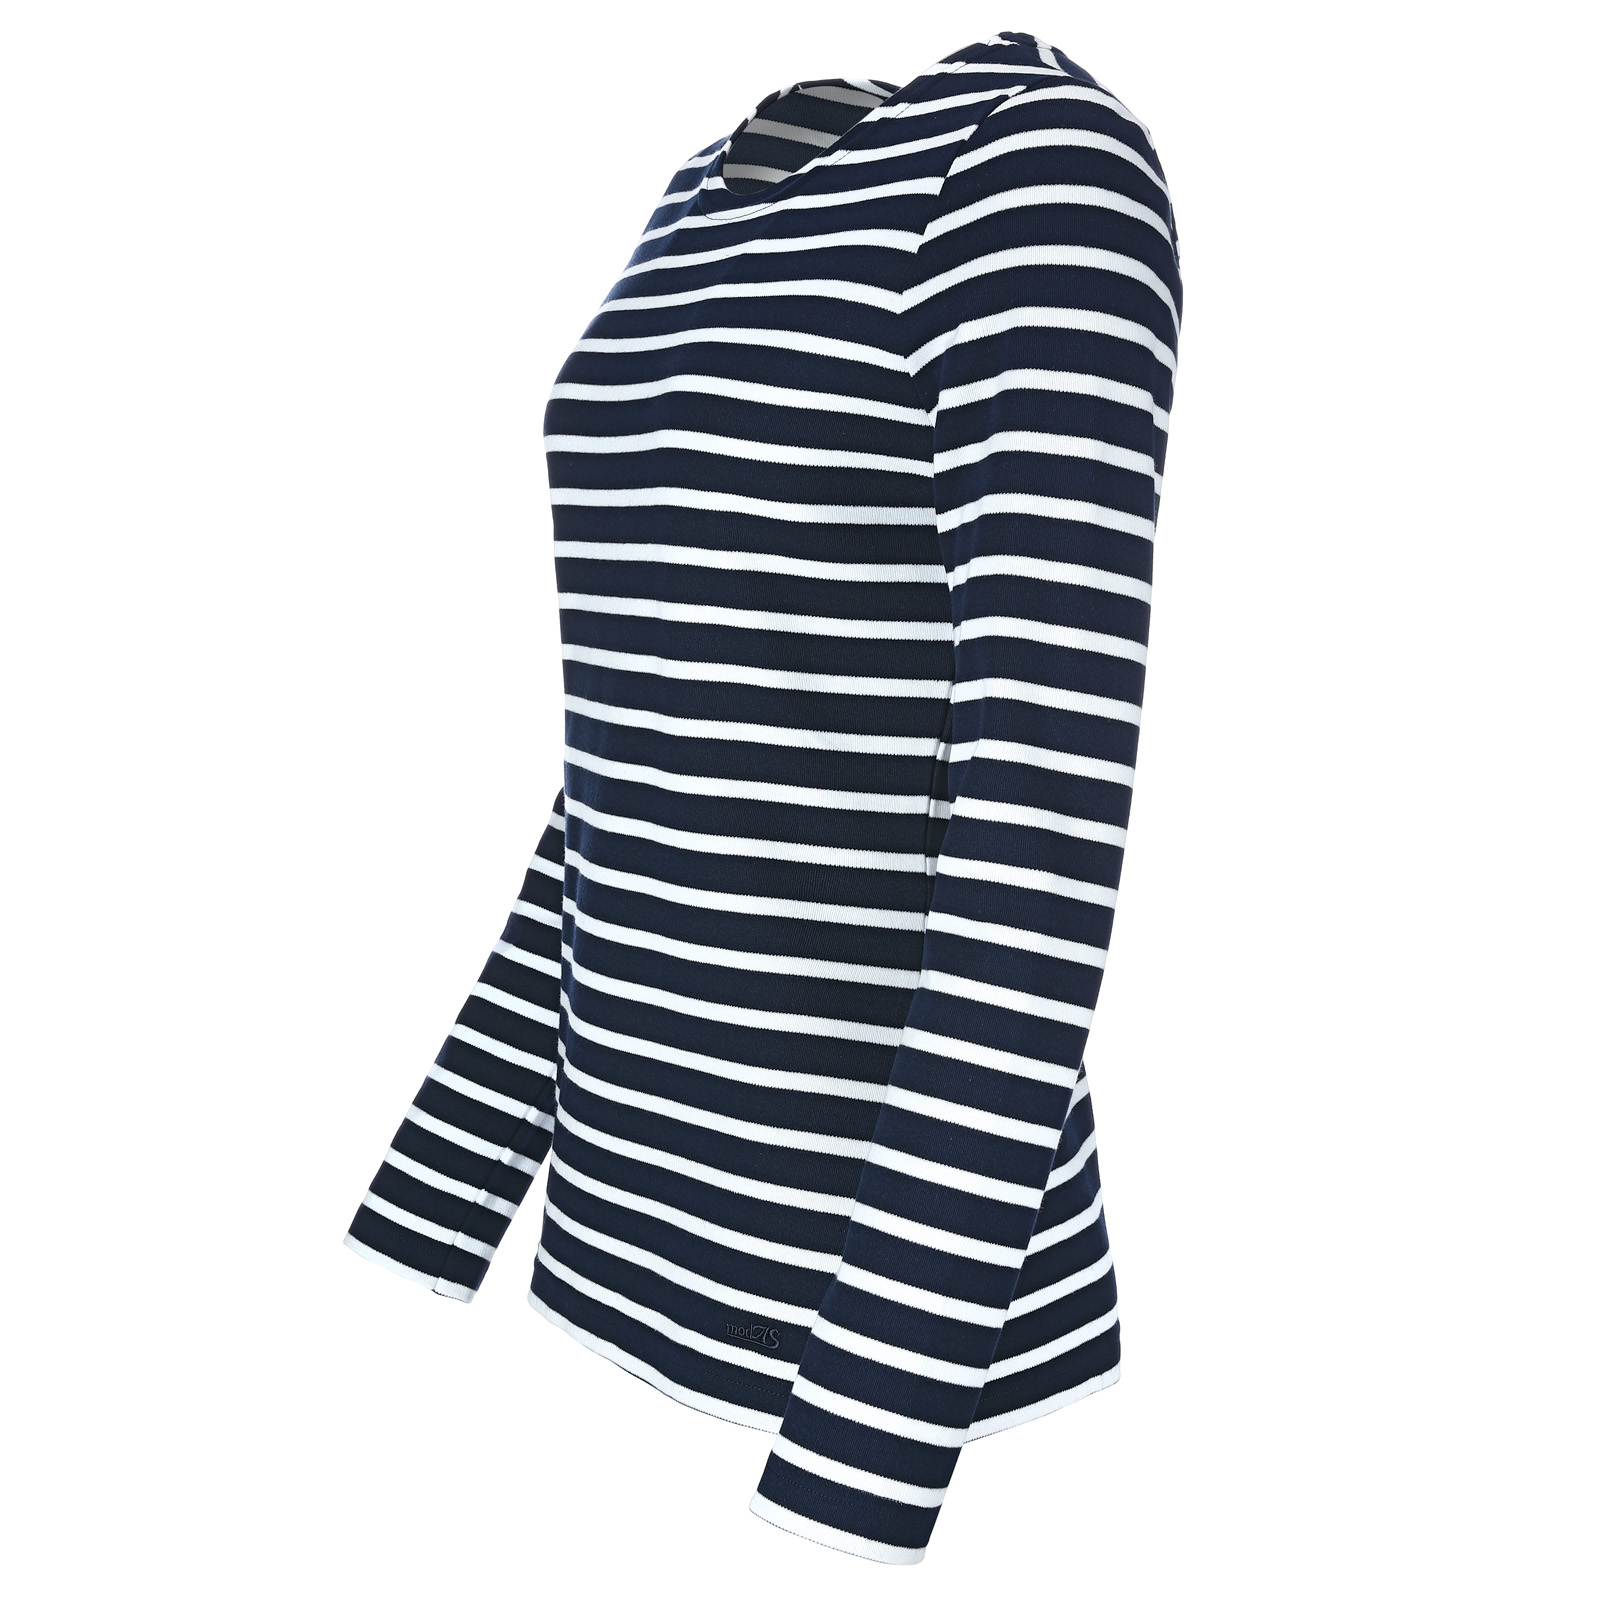 Maritimes Damen-Shirt 1/1-Arm weiß/grau-melange